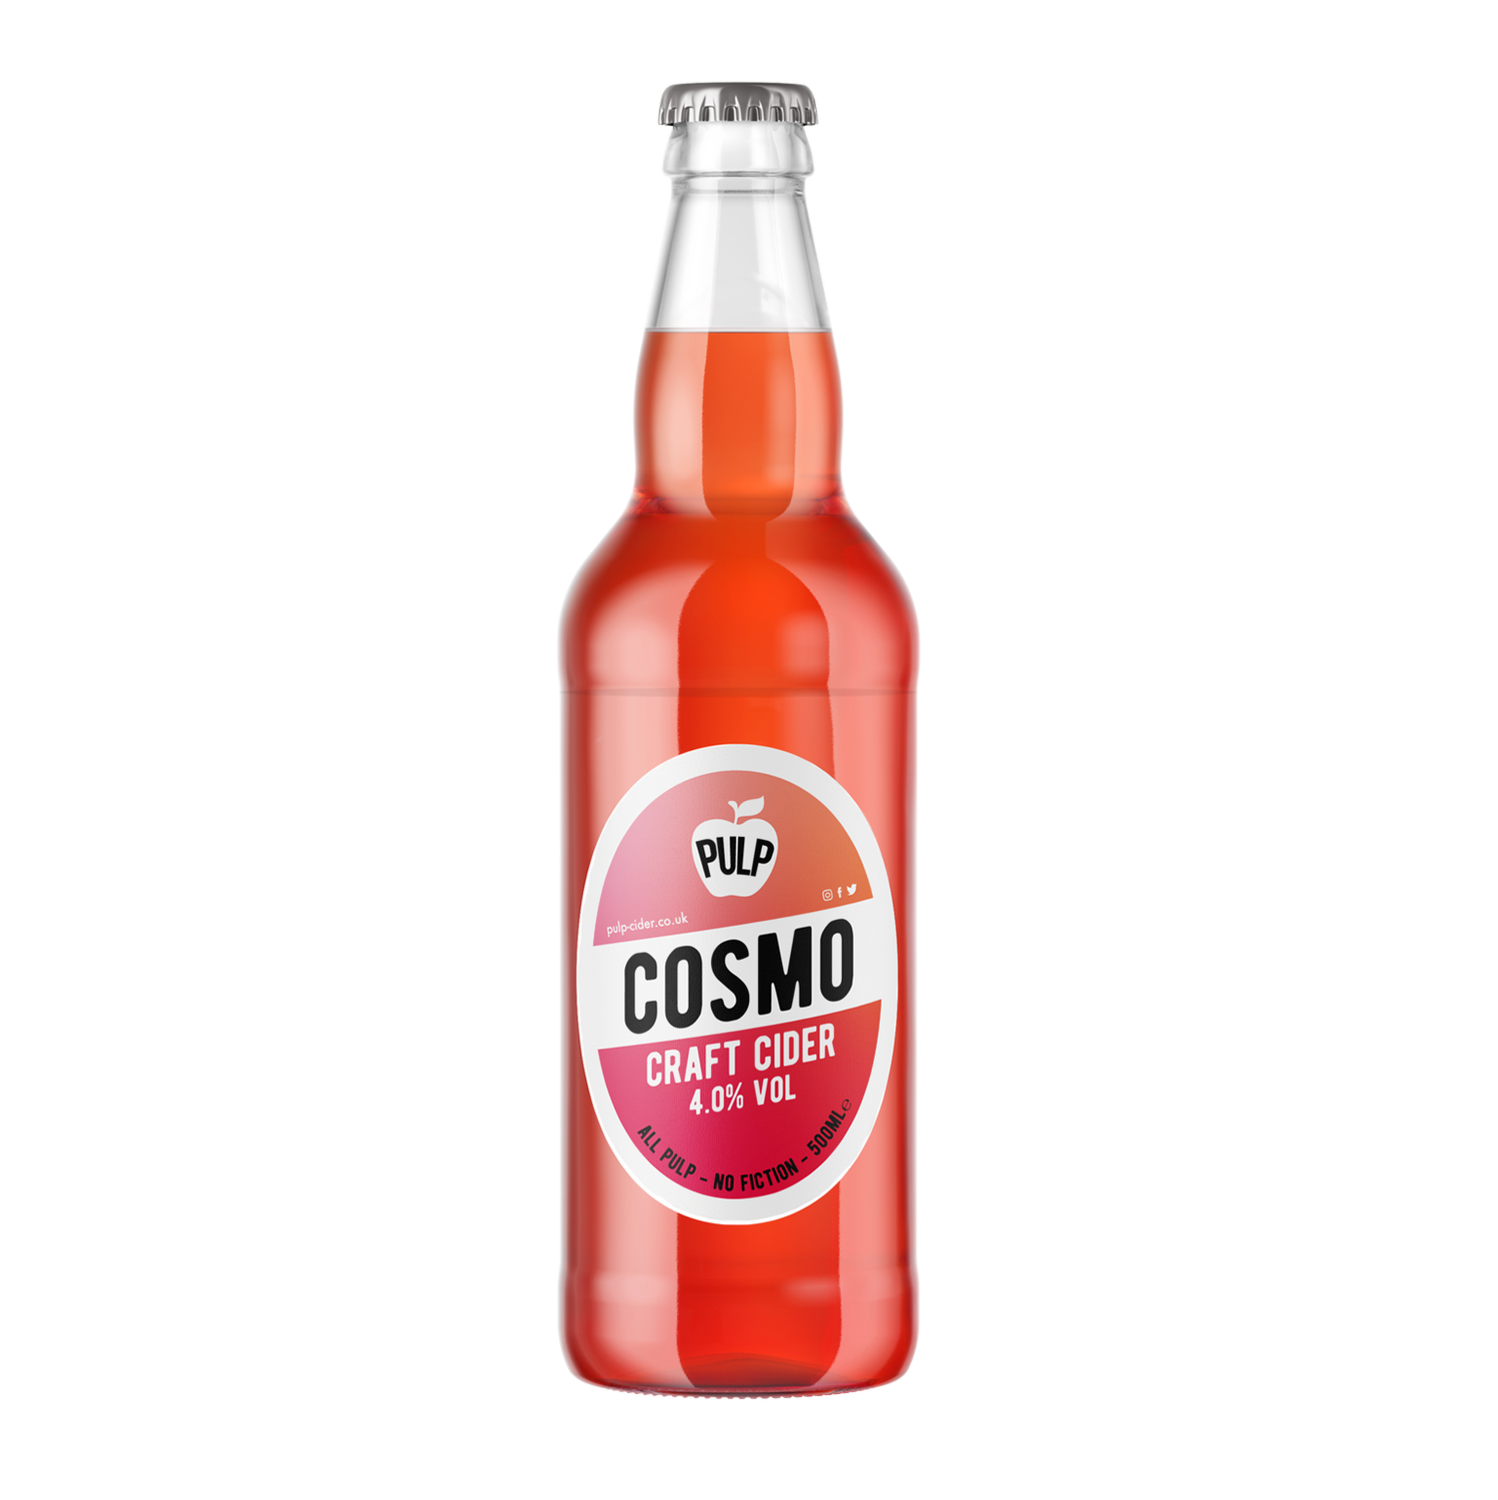 Pulp Cosmo Cider Bottle